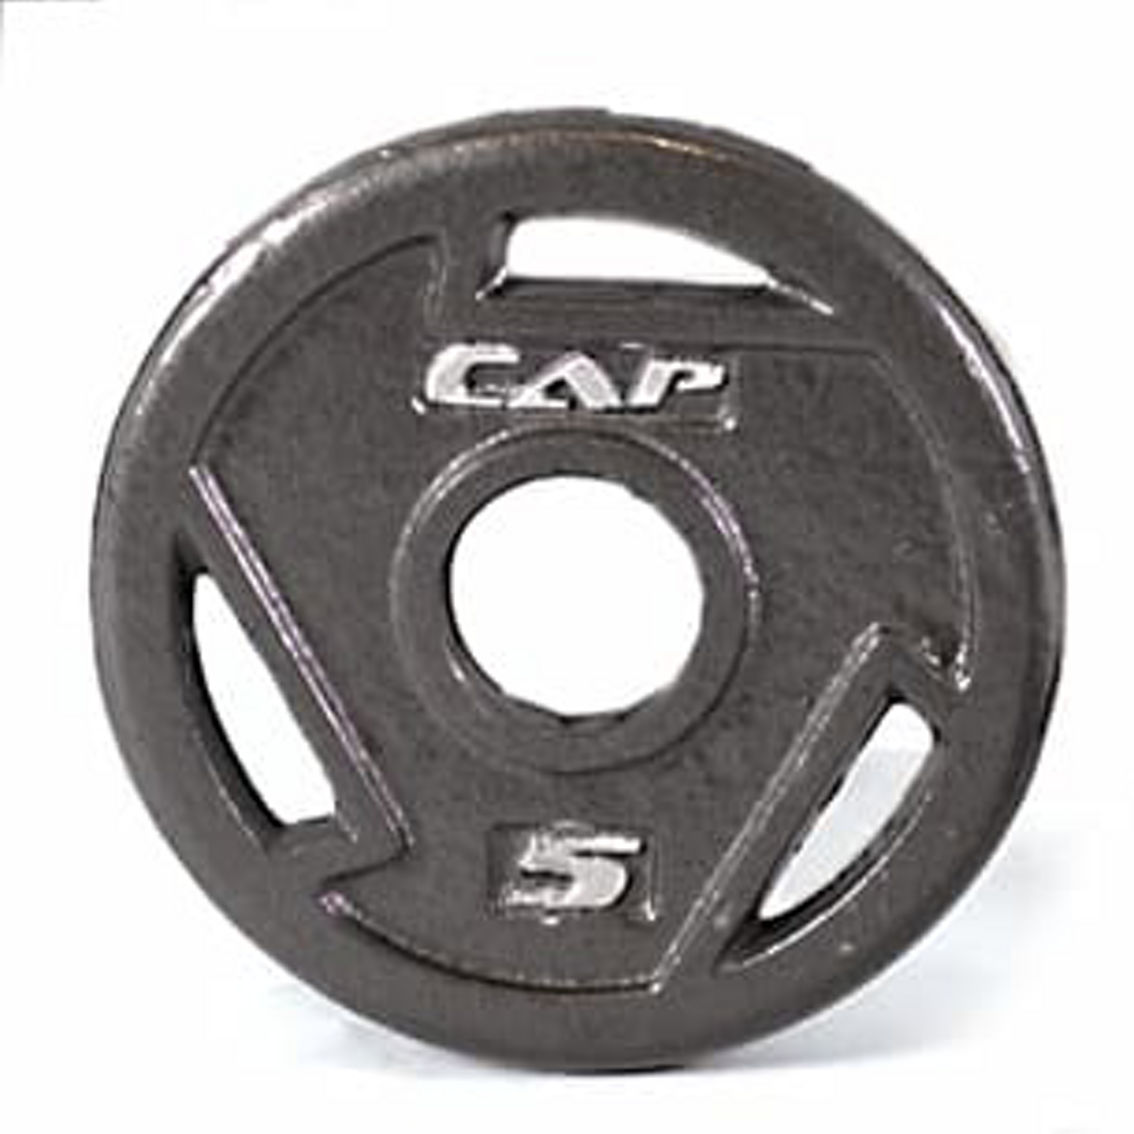 CAP 5 lb Black Olympic Grip Plate-.com - Image 2 of 2